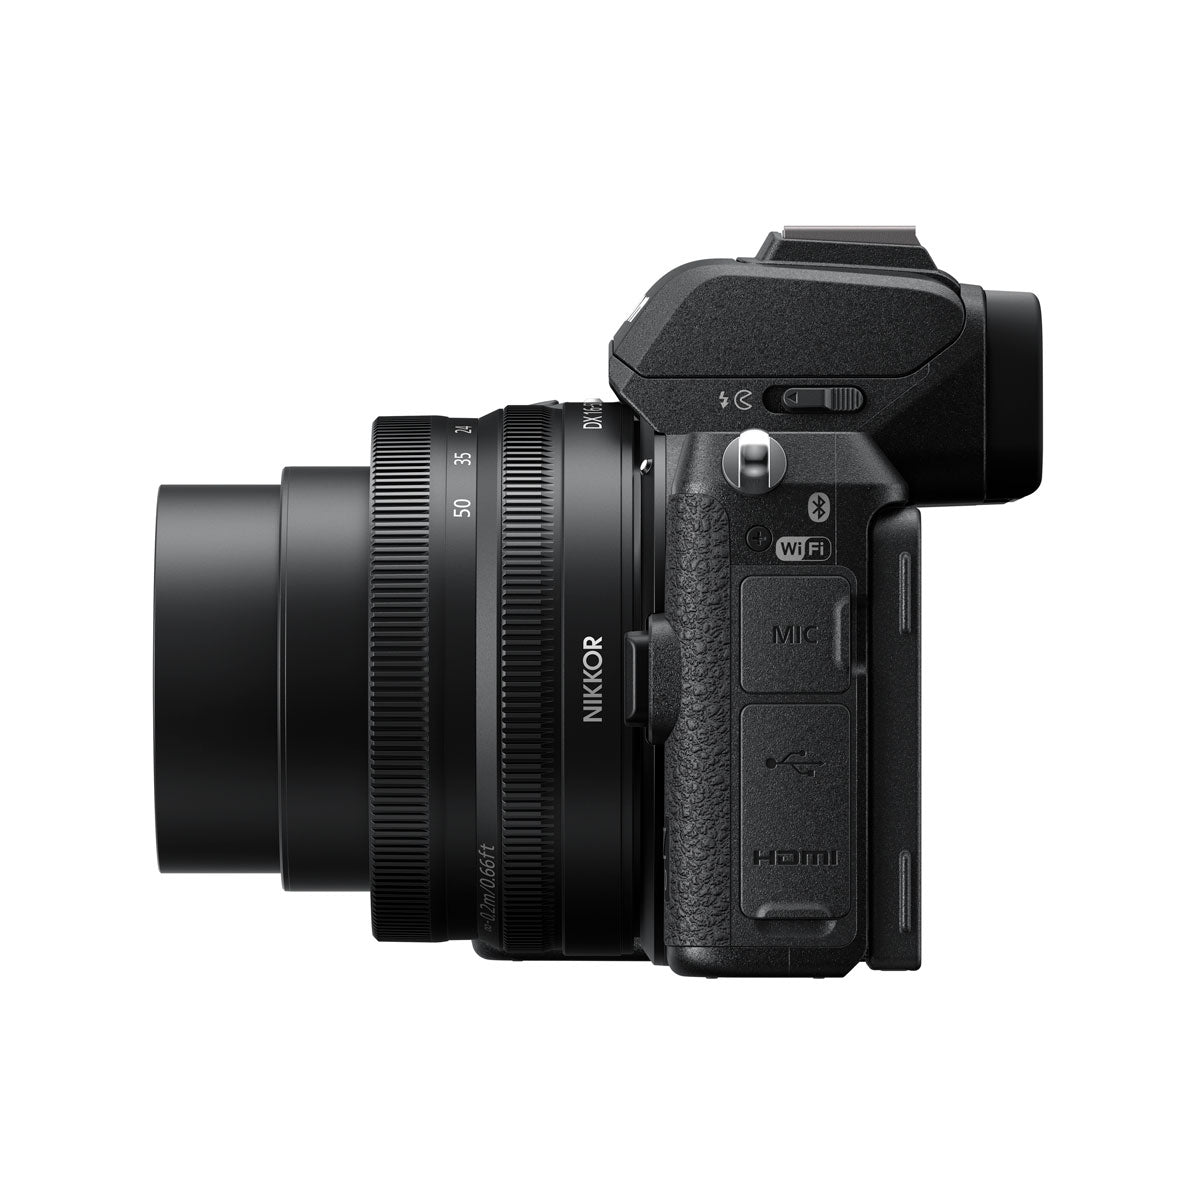 Nikon Z50 Mirrorless Digital Camera with 16-50mm & 50-250mm Lens